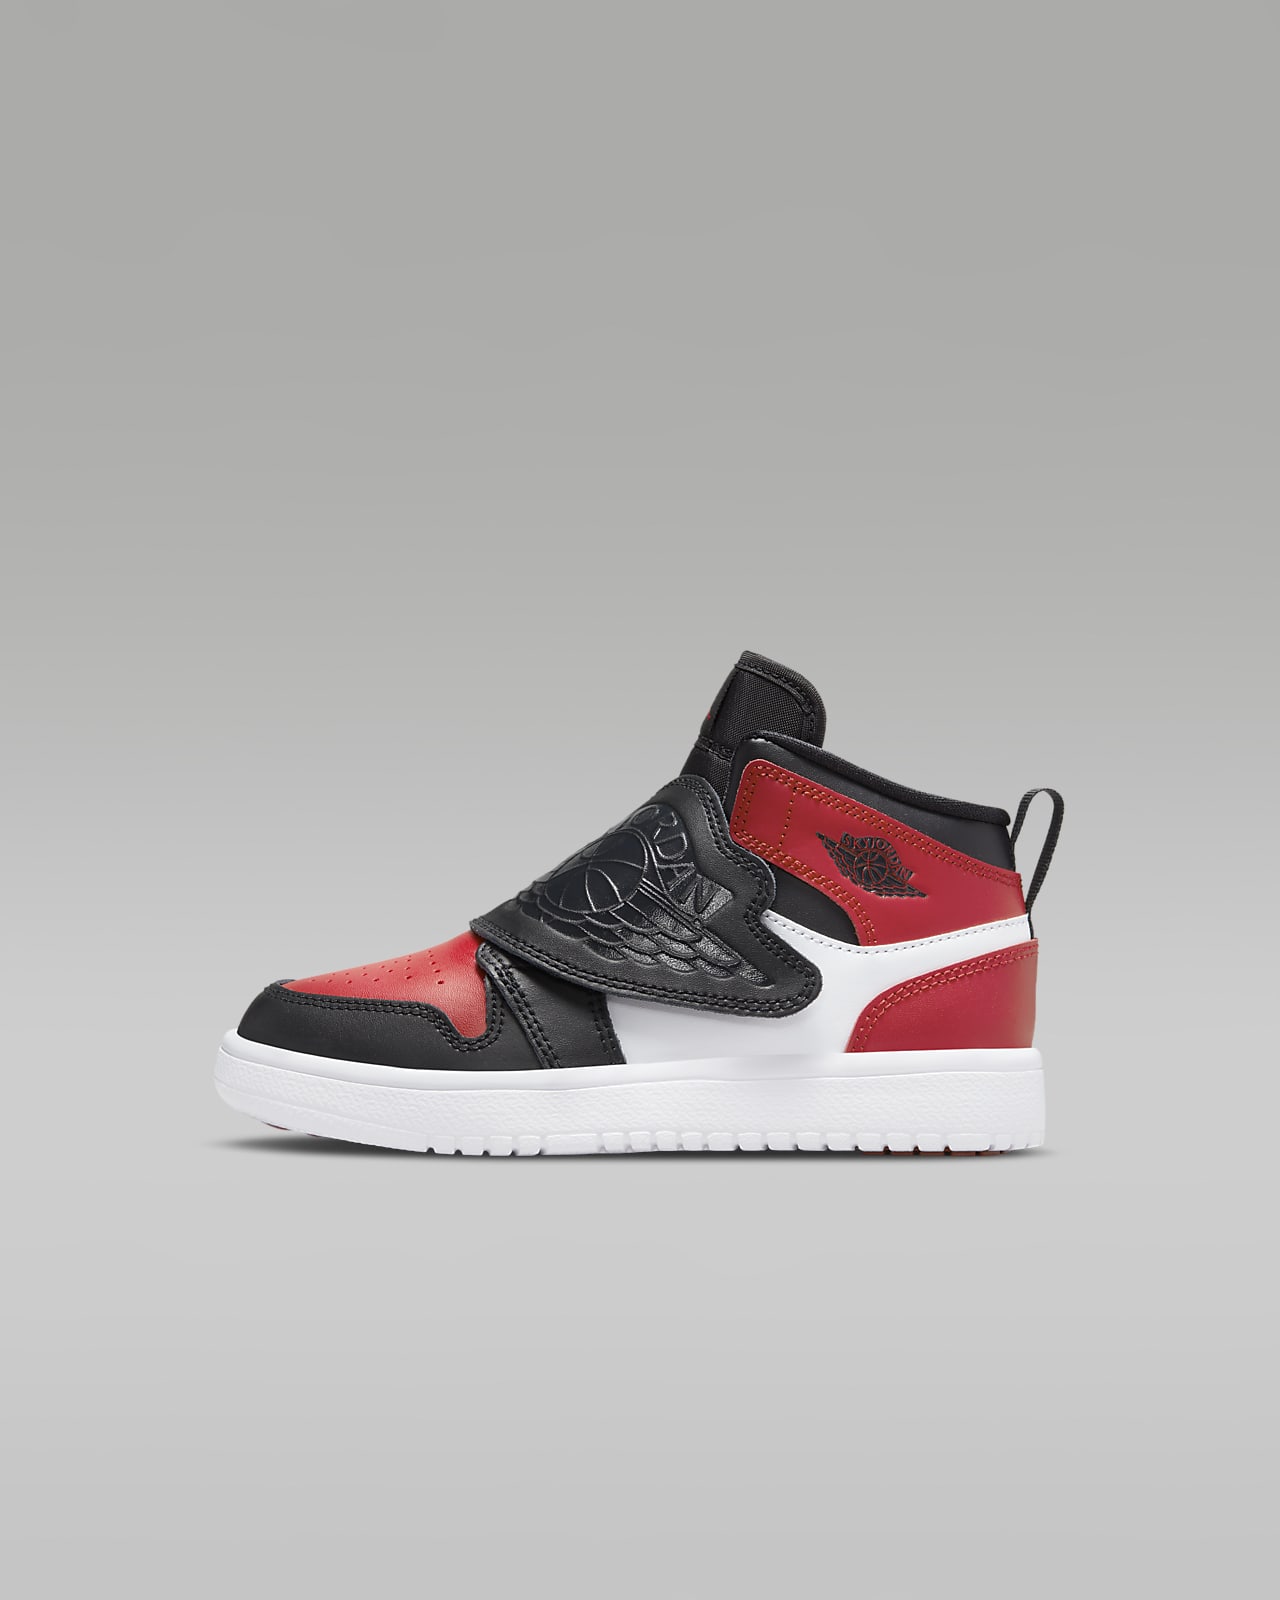 Sky Jordan 1-sko til børn. Nike DK